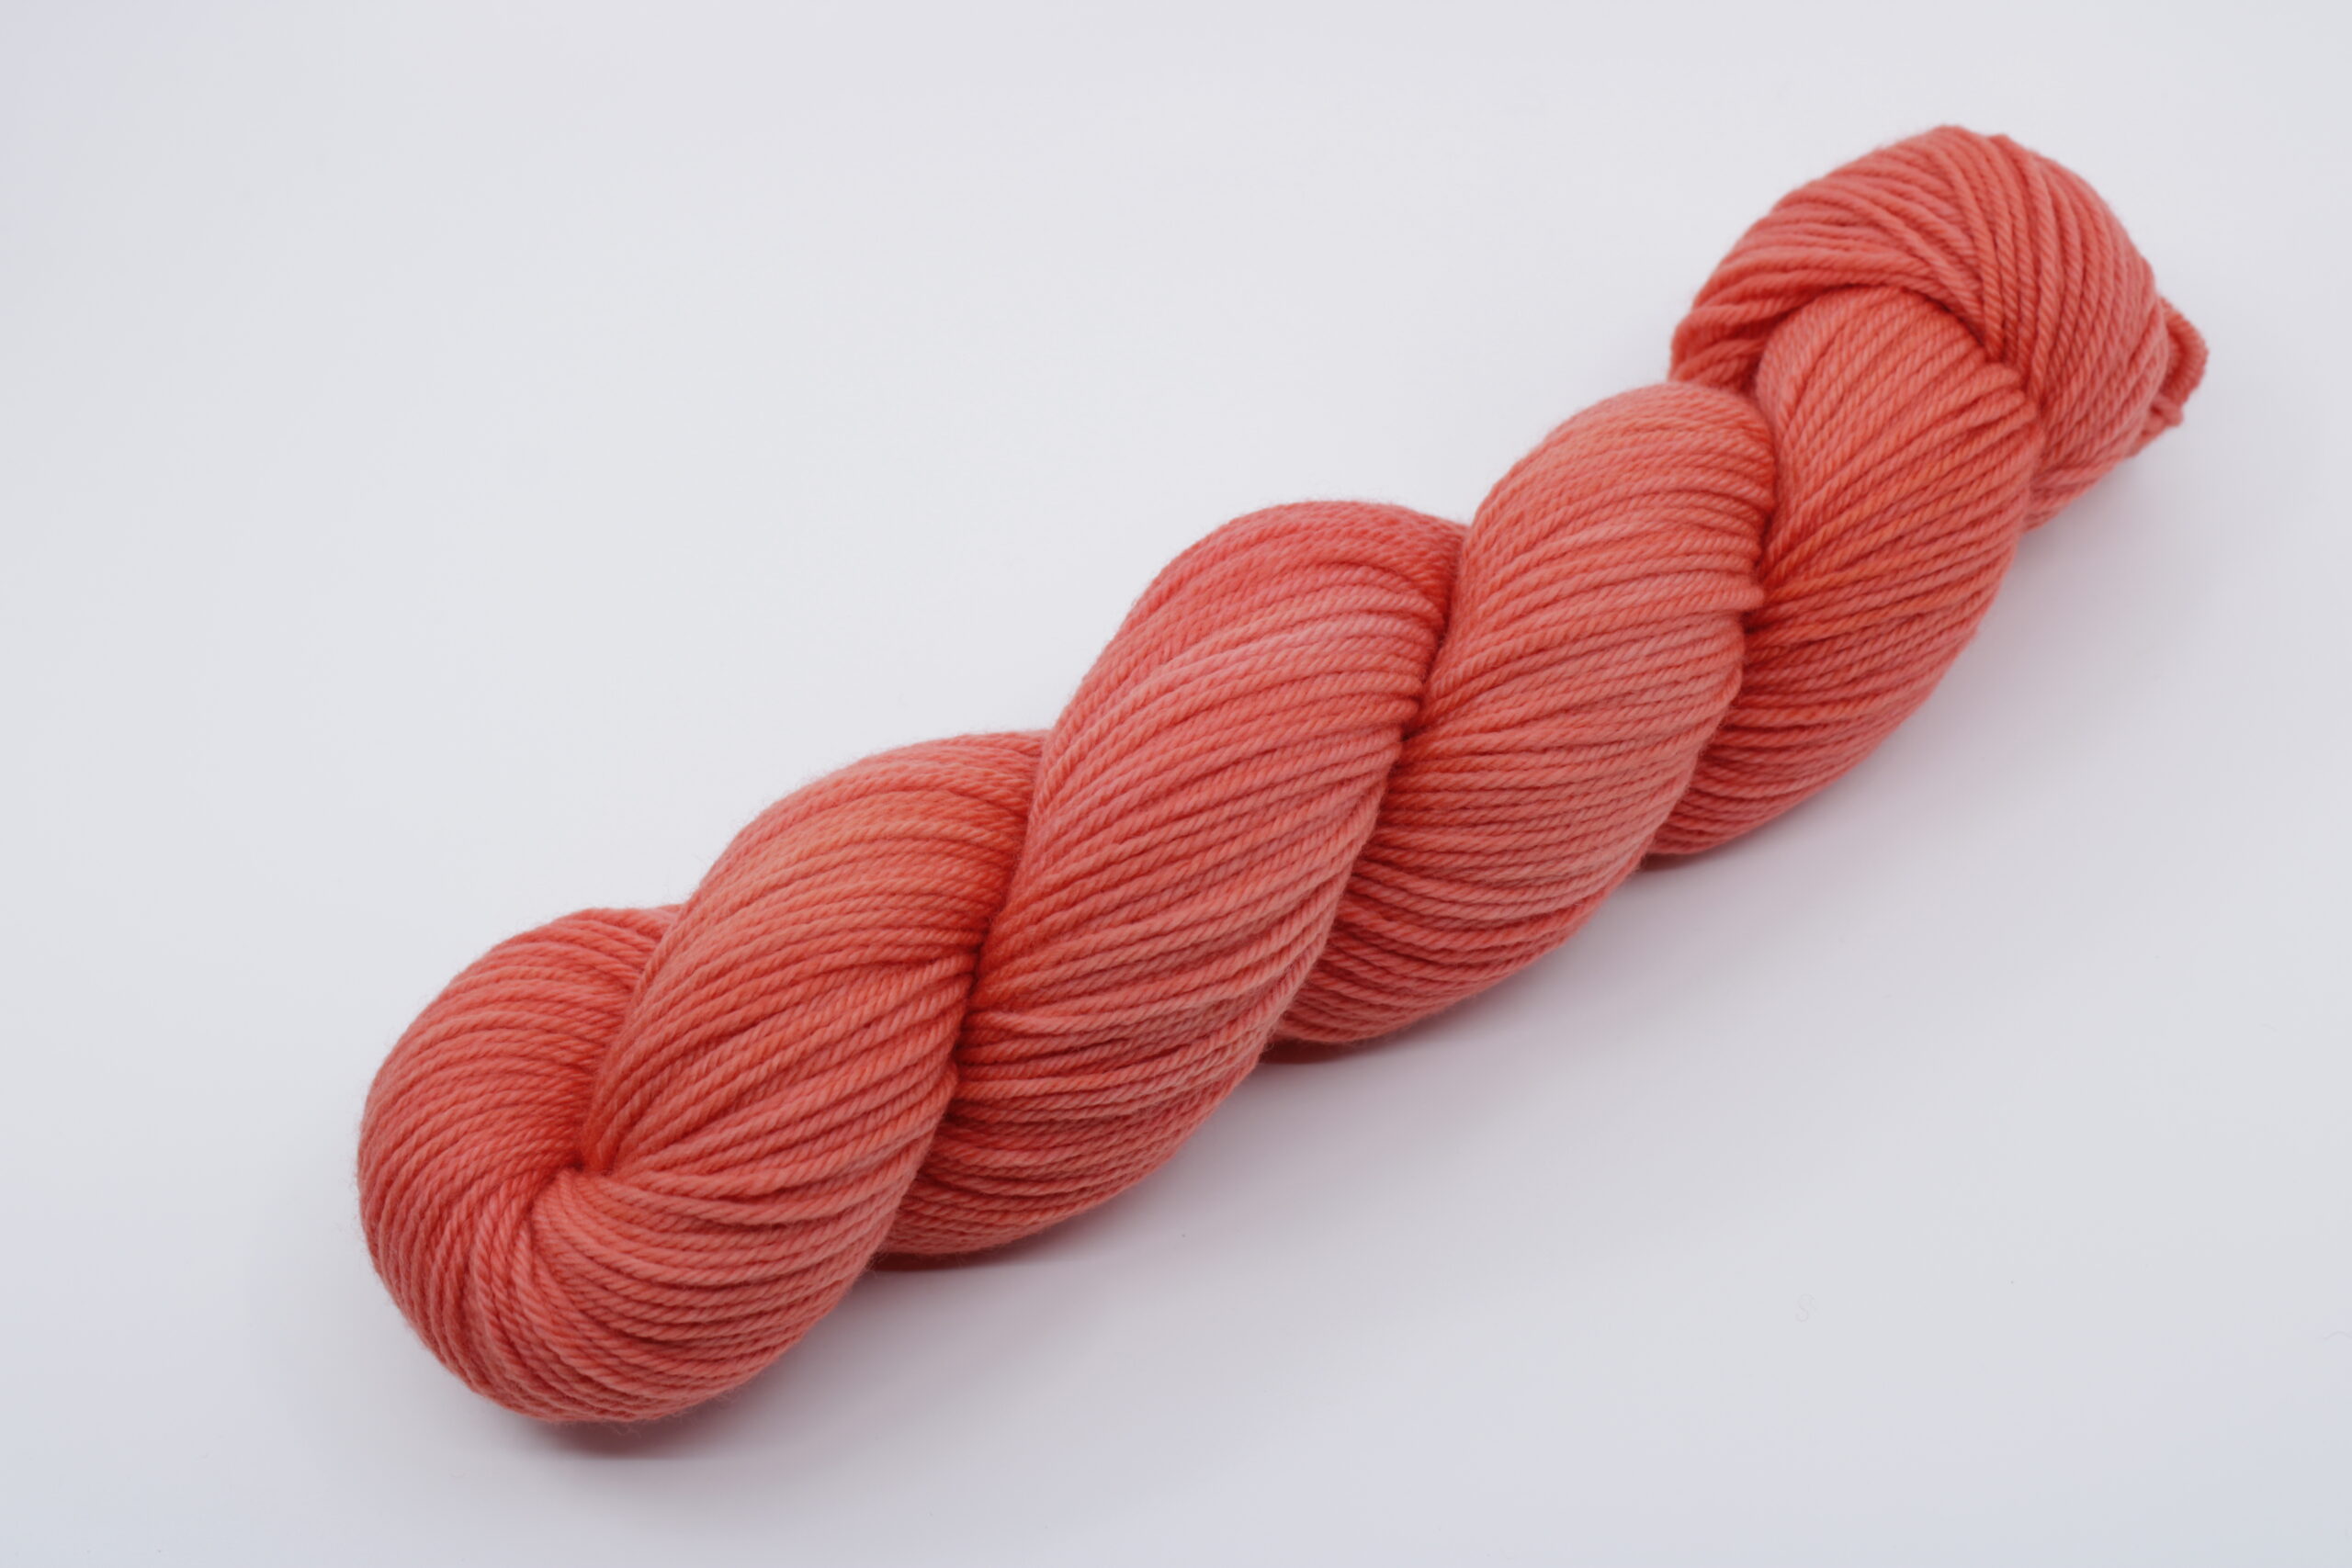 Folcon worsted base. Wool 100% untreated merino. Trio of colors: orange. Color: Yvi.